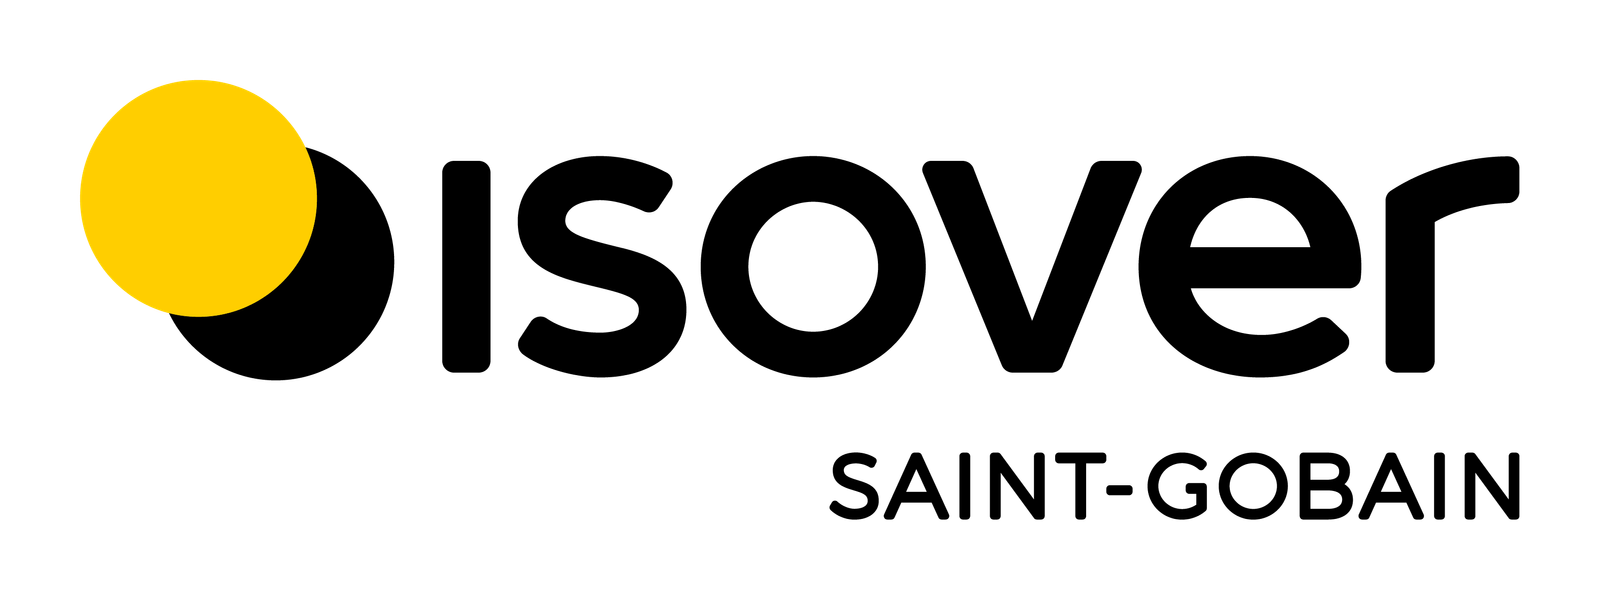 Isover_logo